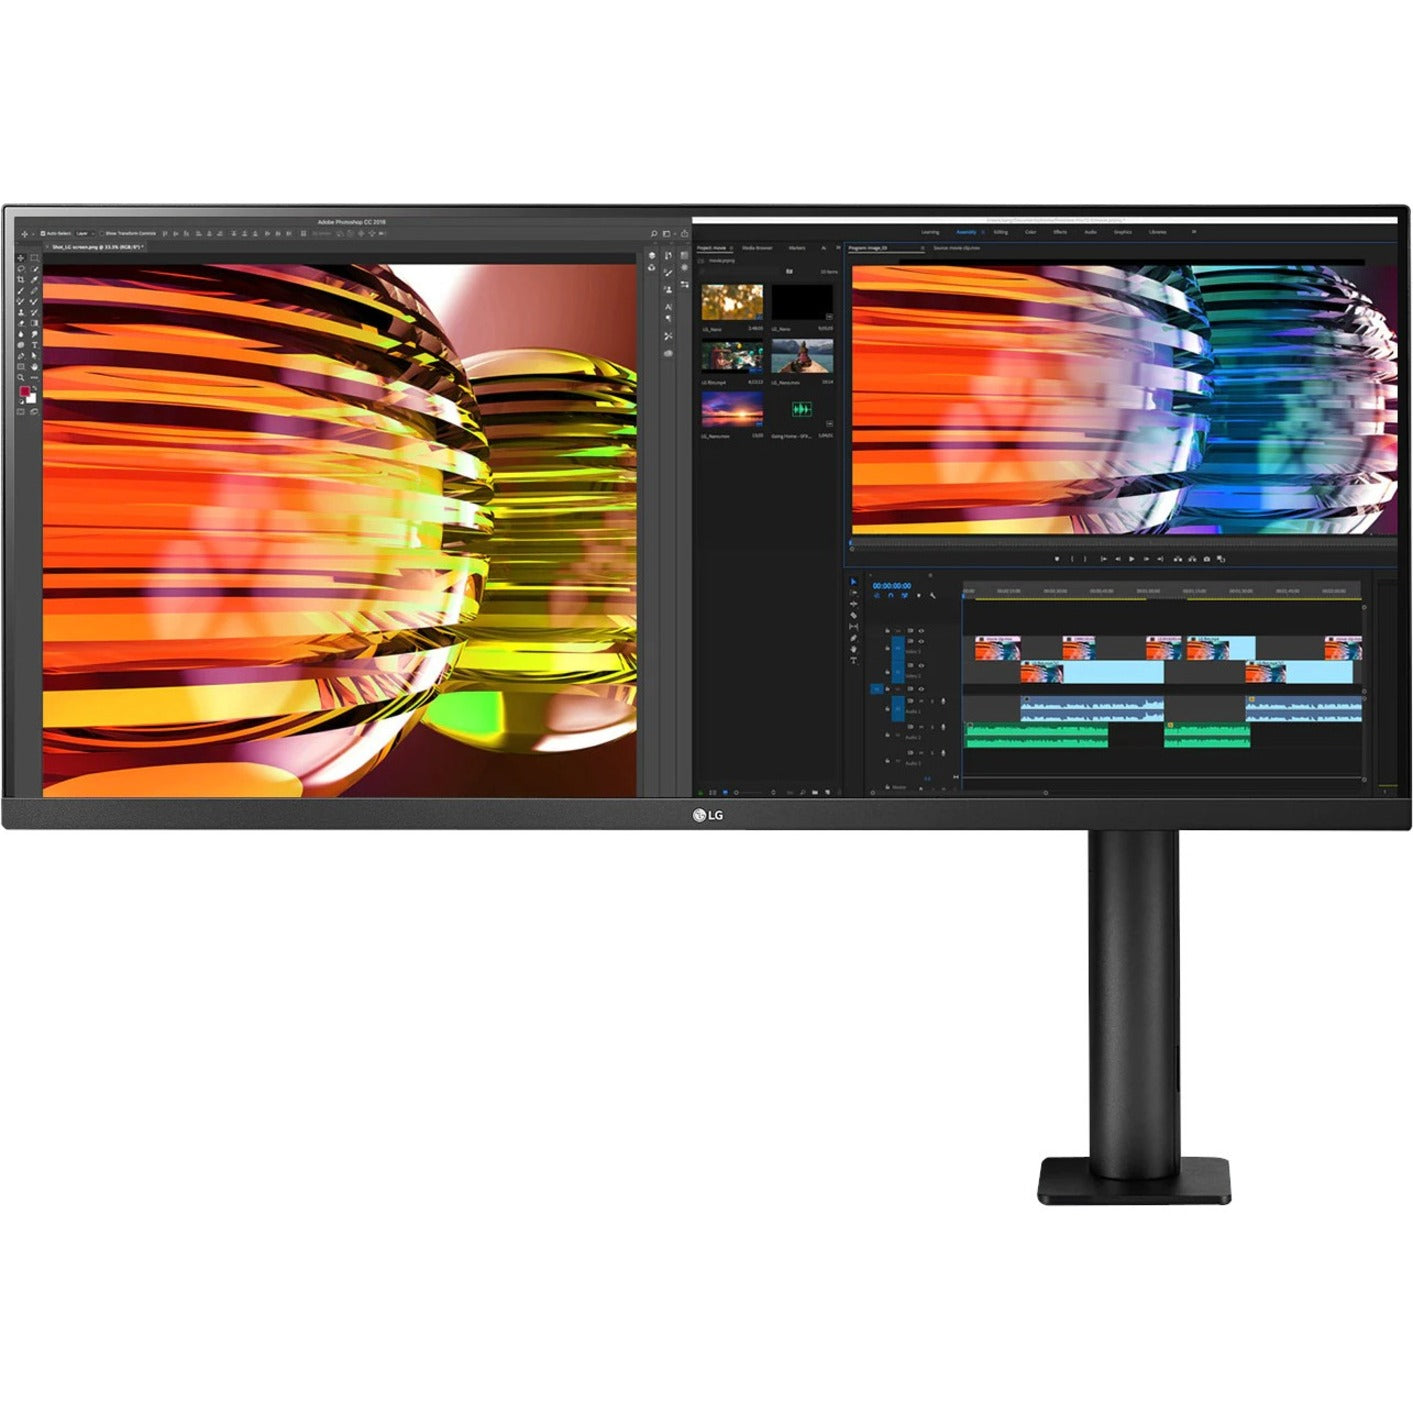 LG Ultrawide 34 WQHD LCD Monitor - 21:9 [Discontinued]